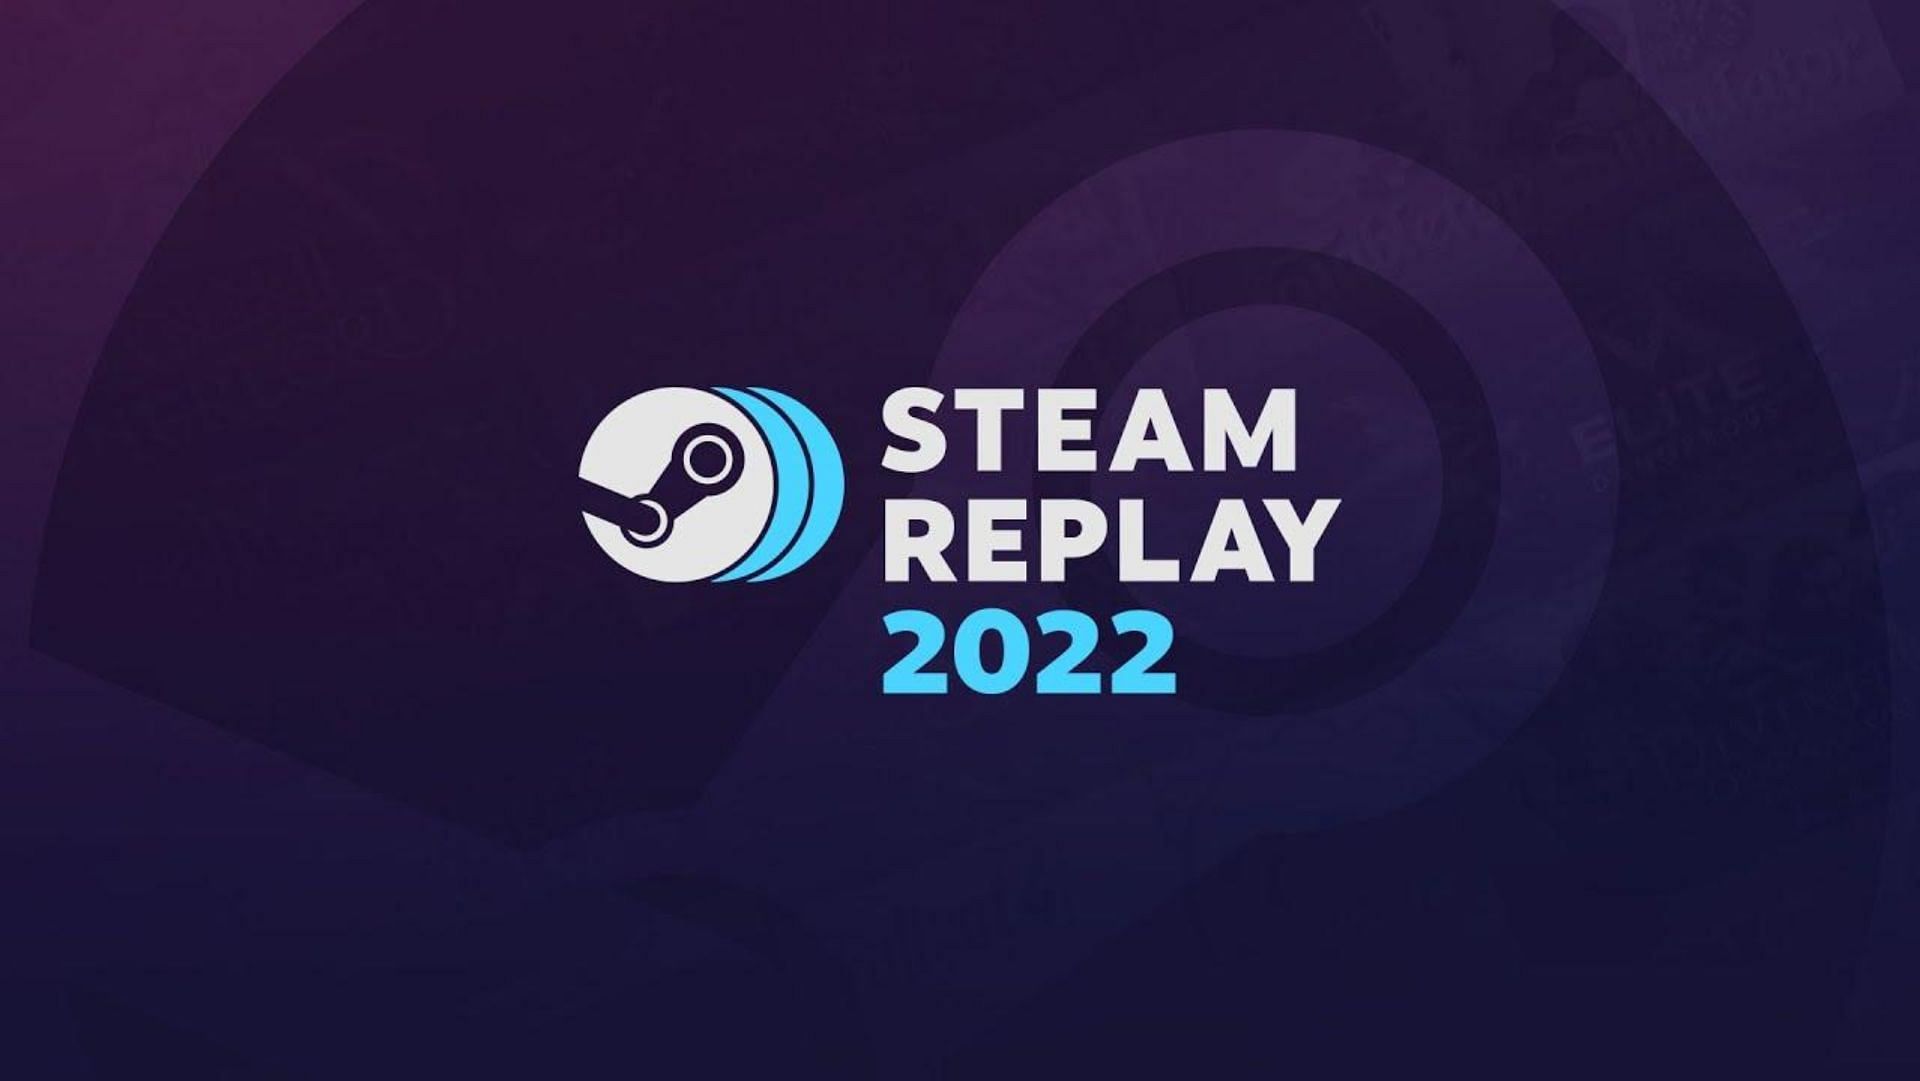 Steam Replay 2022 is live (Image via Valve, Steam)